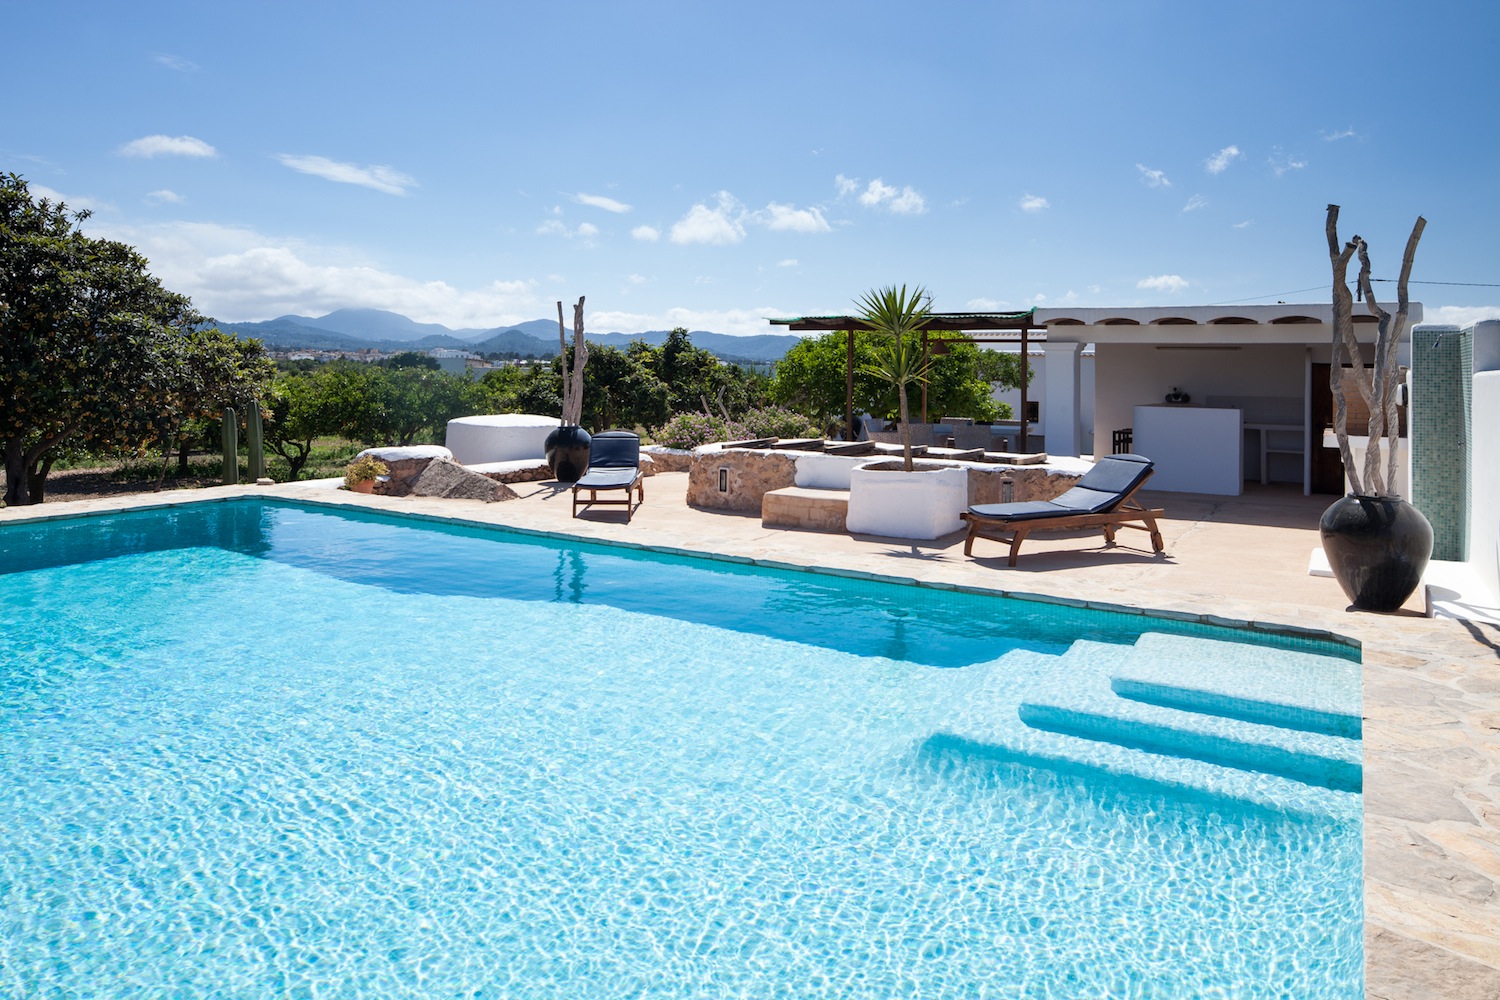 How To Safely Book A Villa In Ibiza